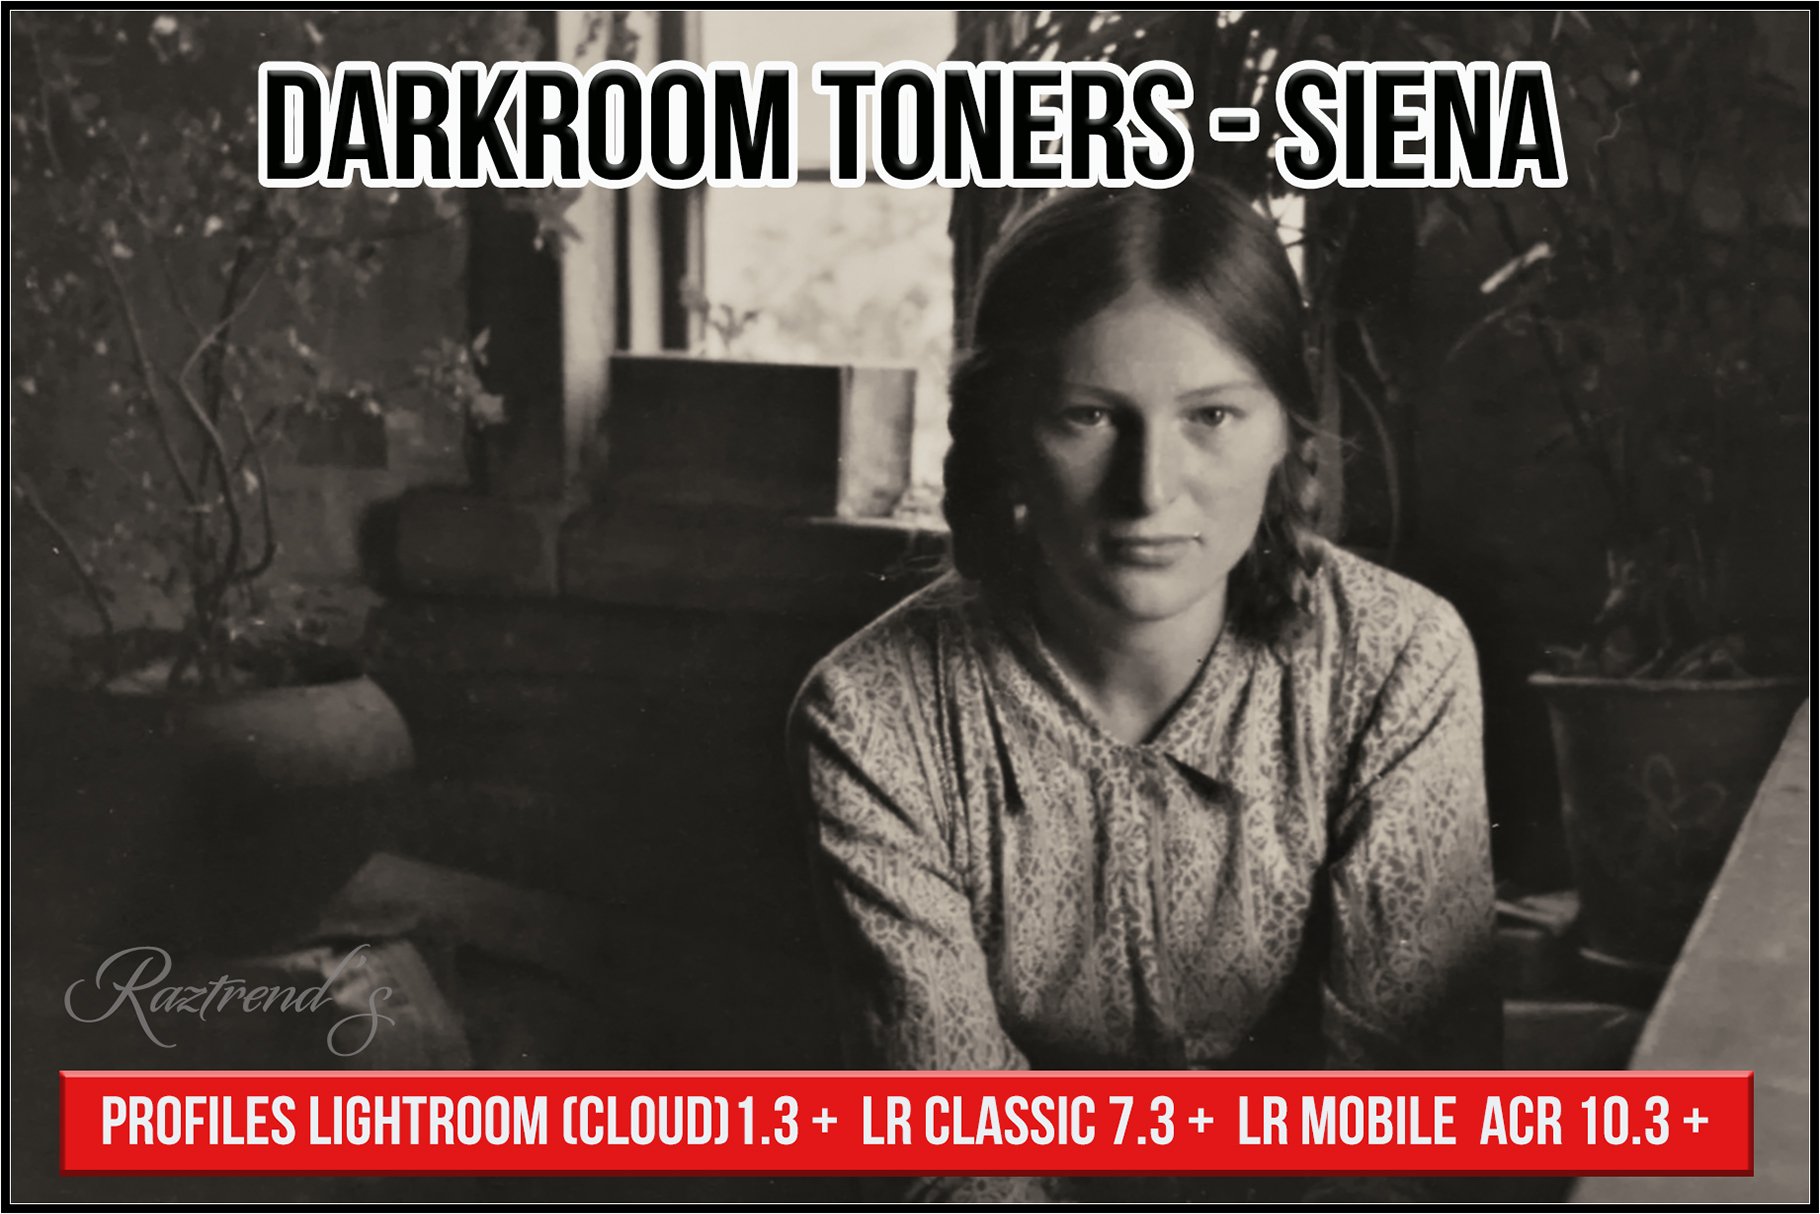 Darkroom Toners - Sienacover image.